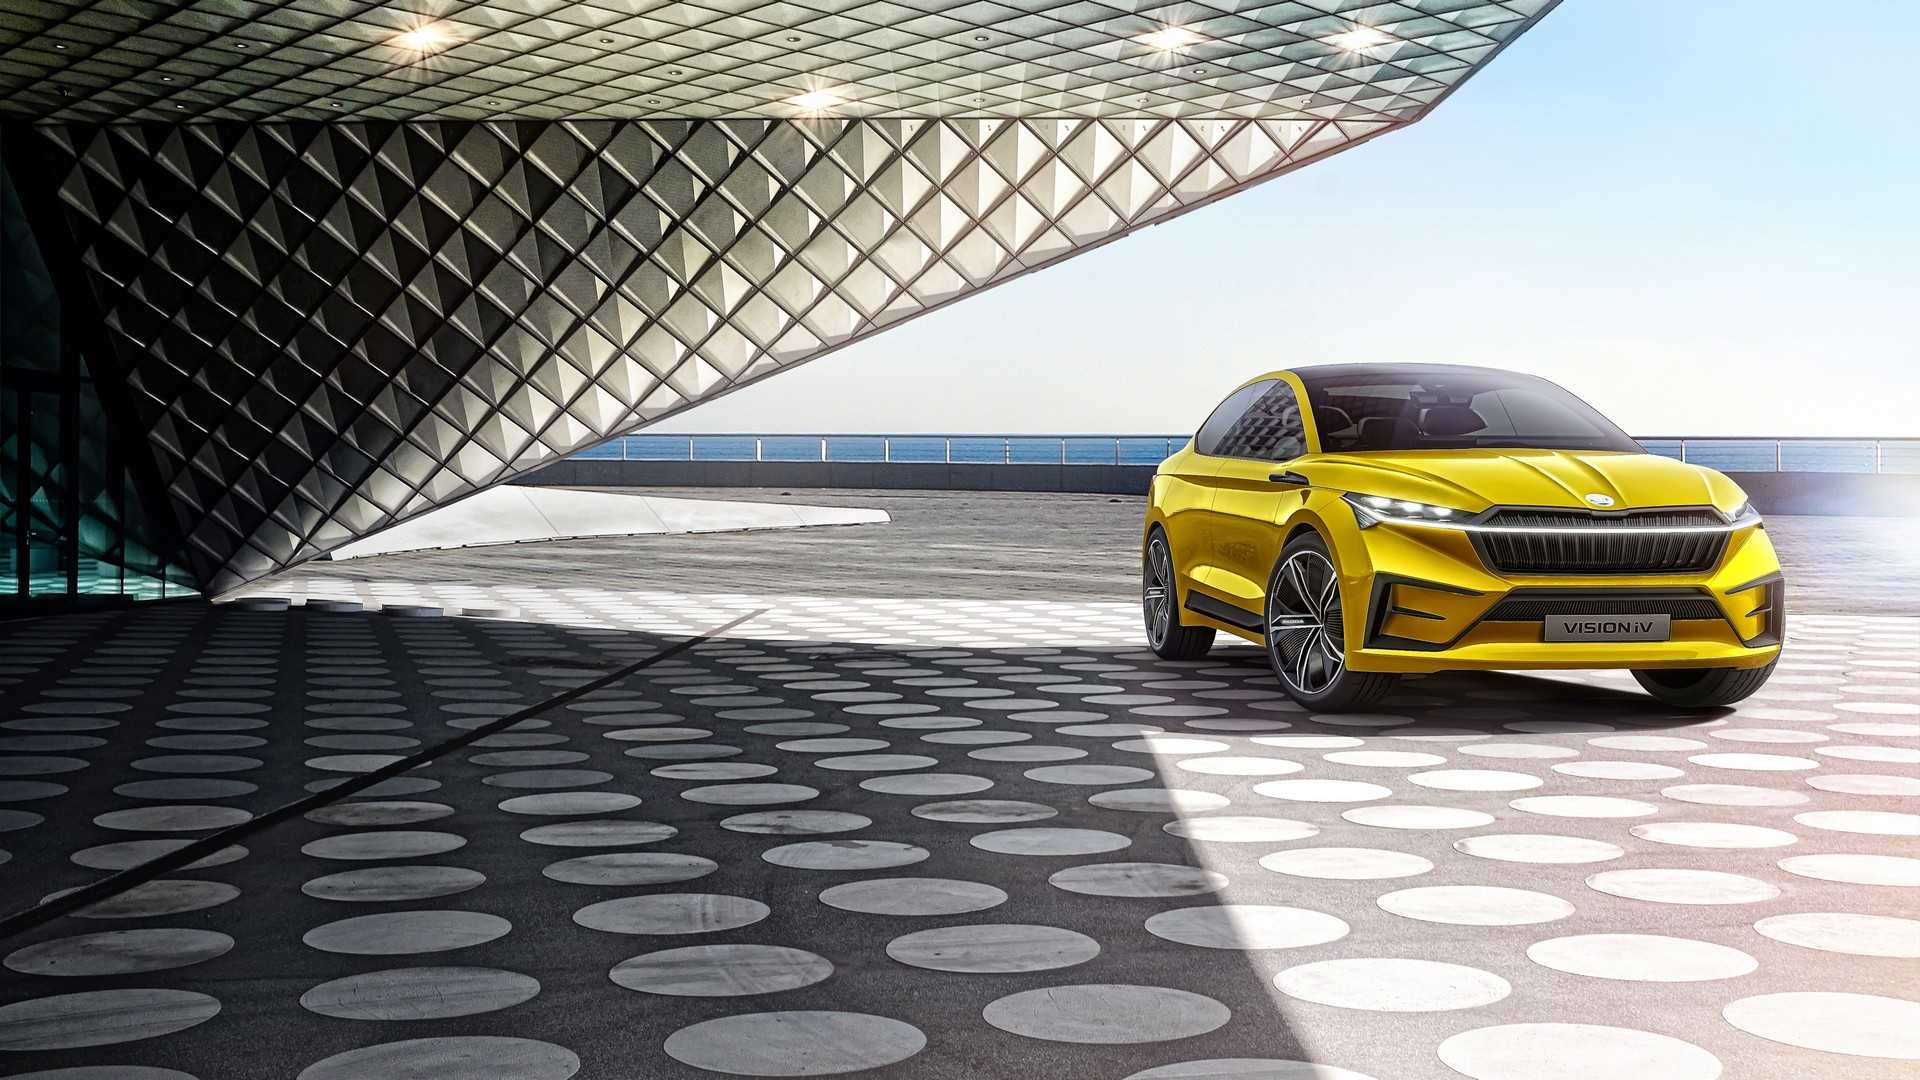 Škoda Vision iV concept